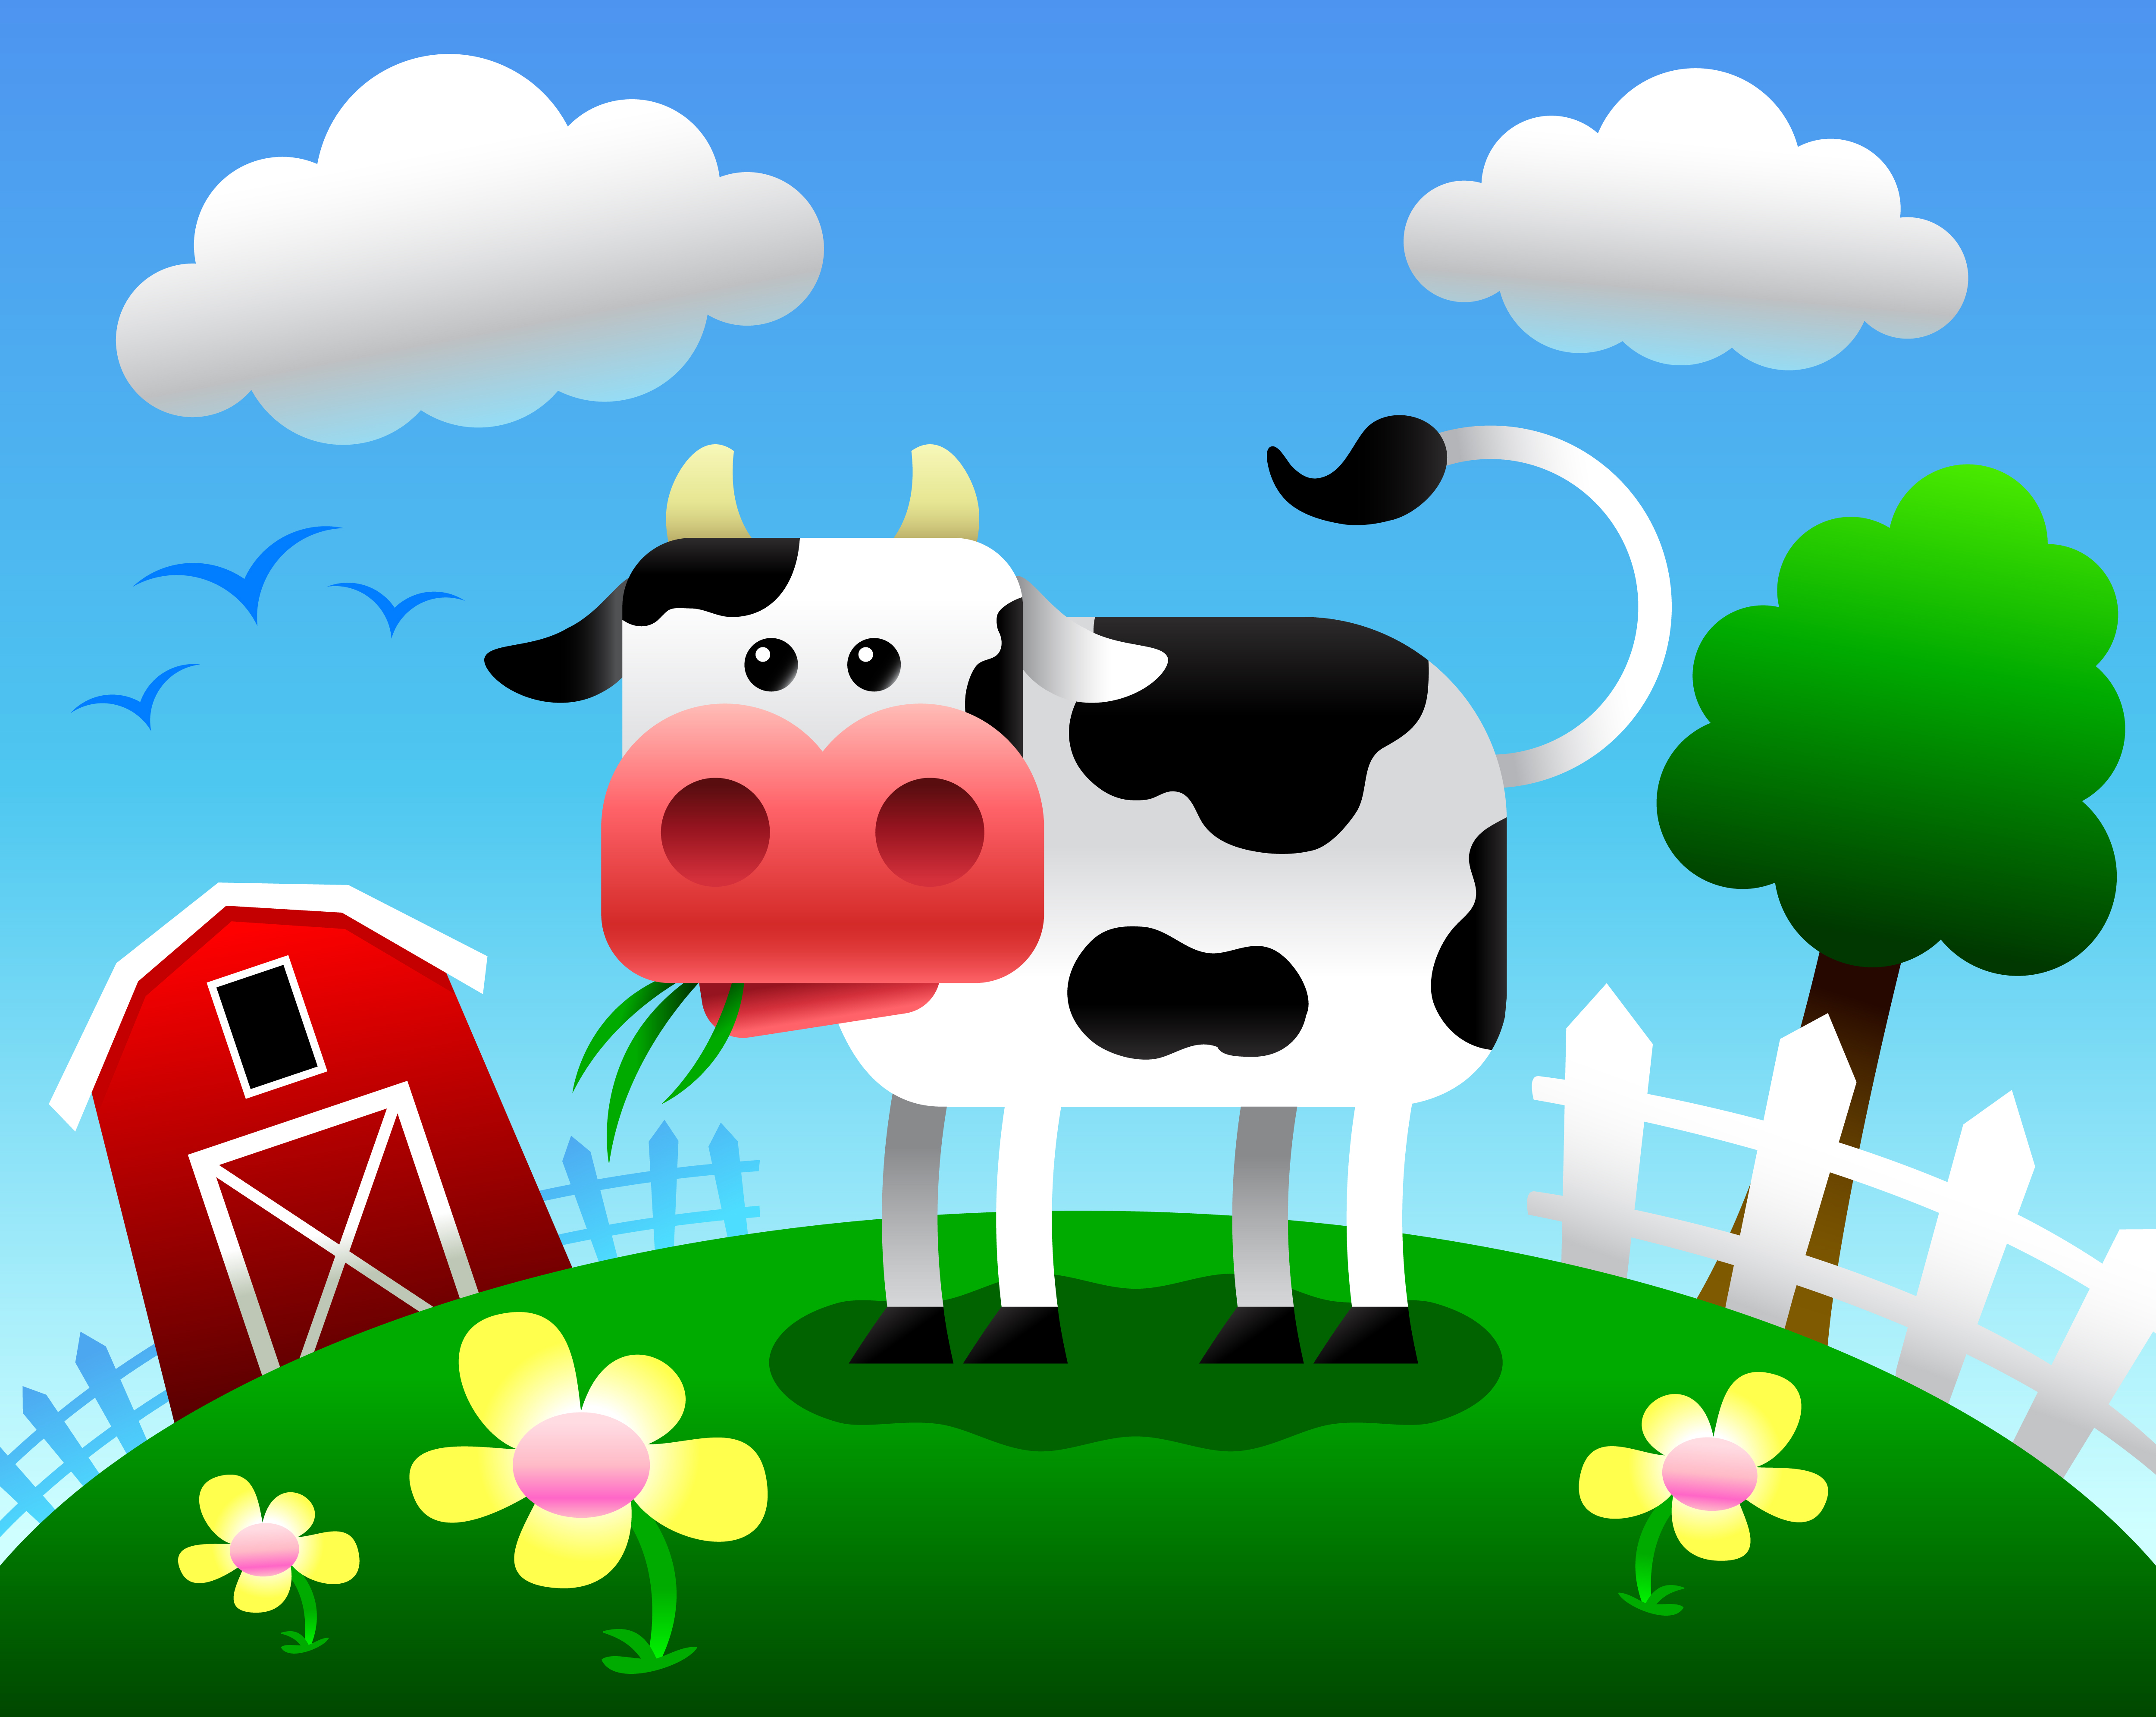 Download Cow vector cartoon illustration - Download Free Vectors ...